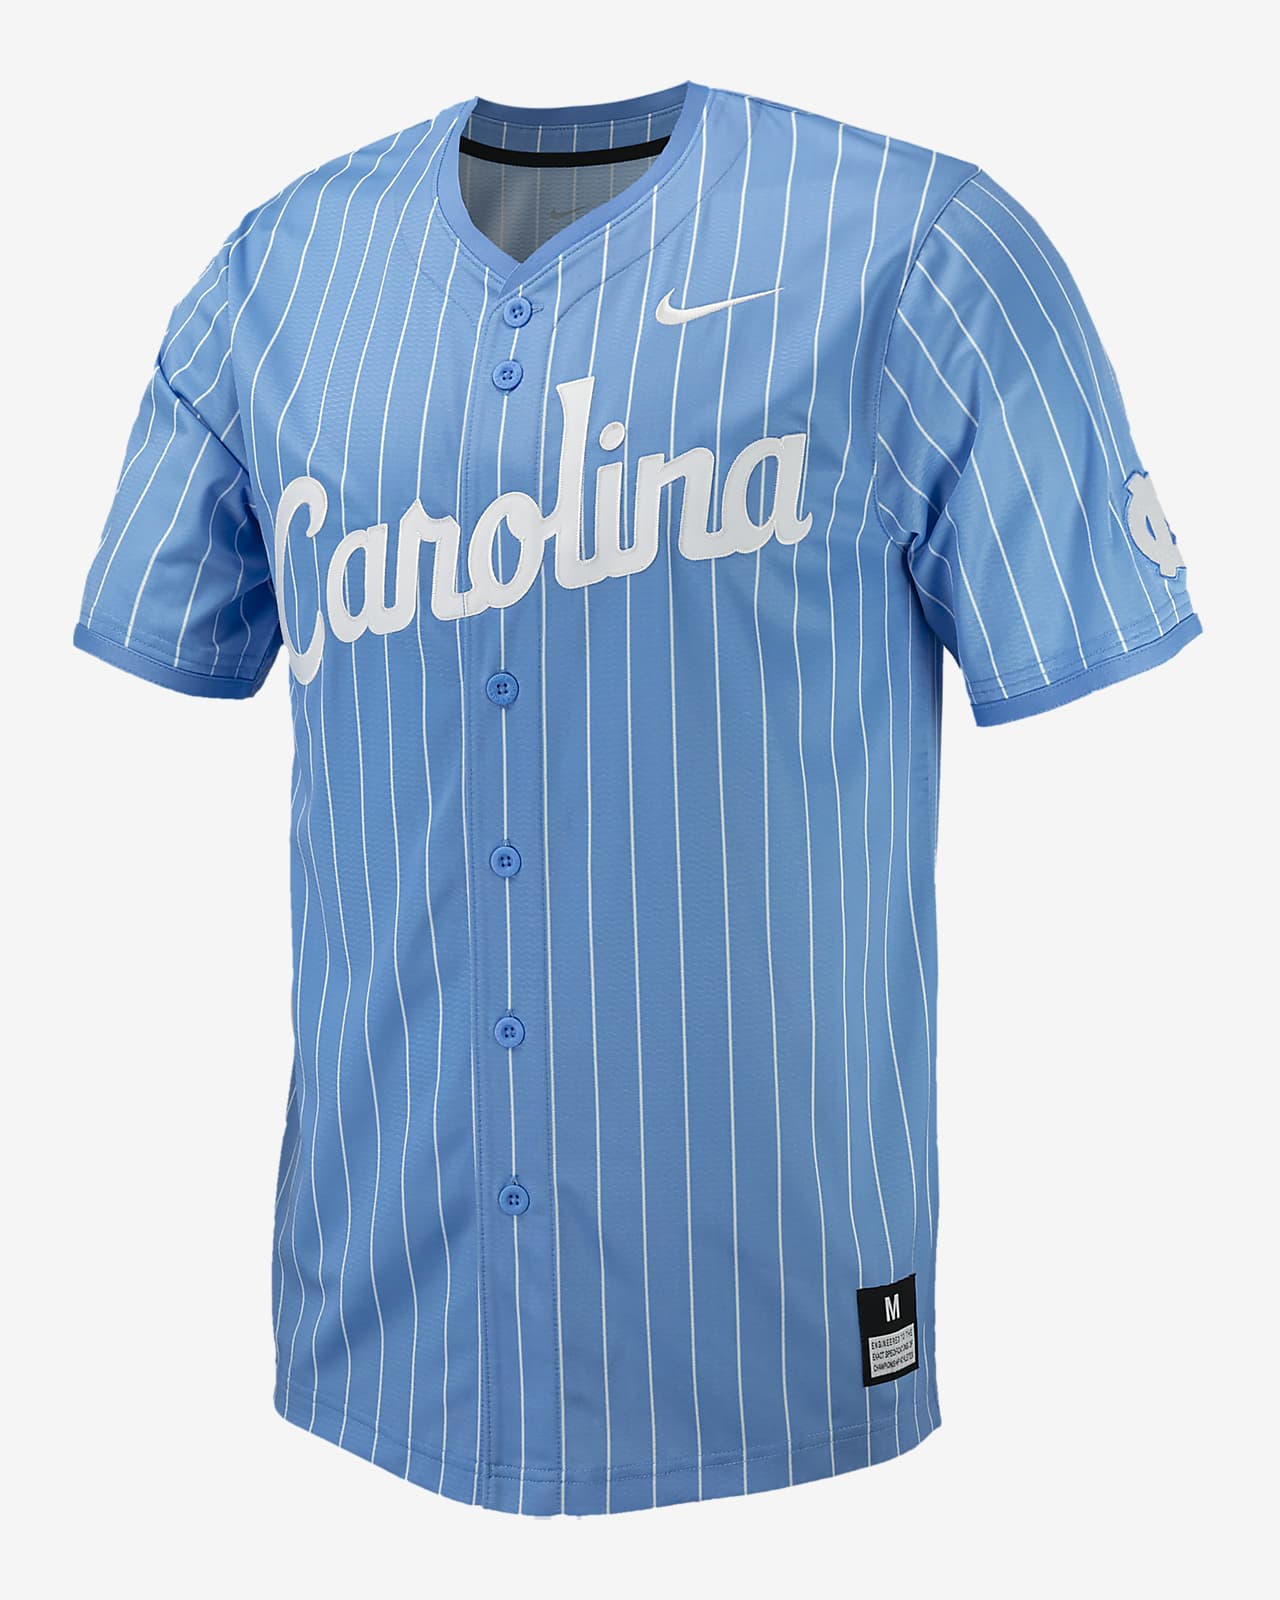 UNC Men's Nike College Replica Baseball Jersey